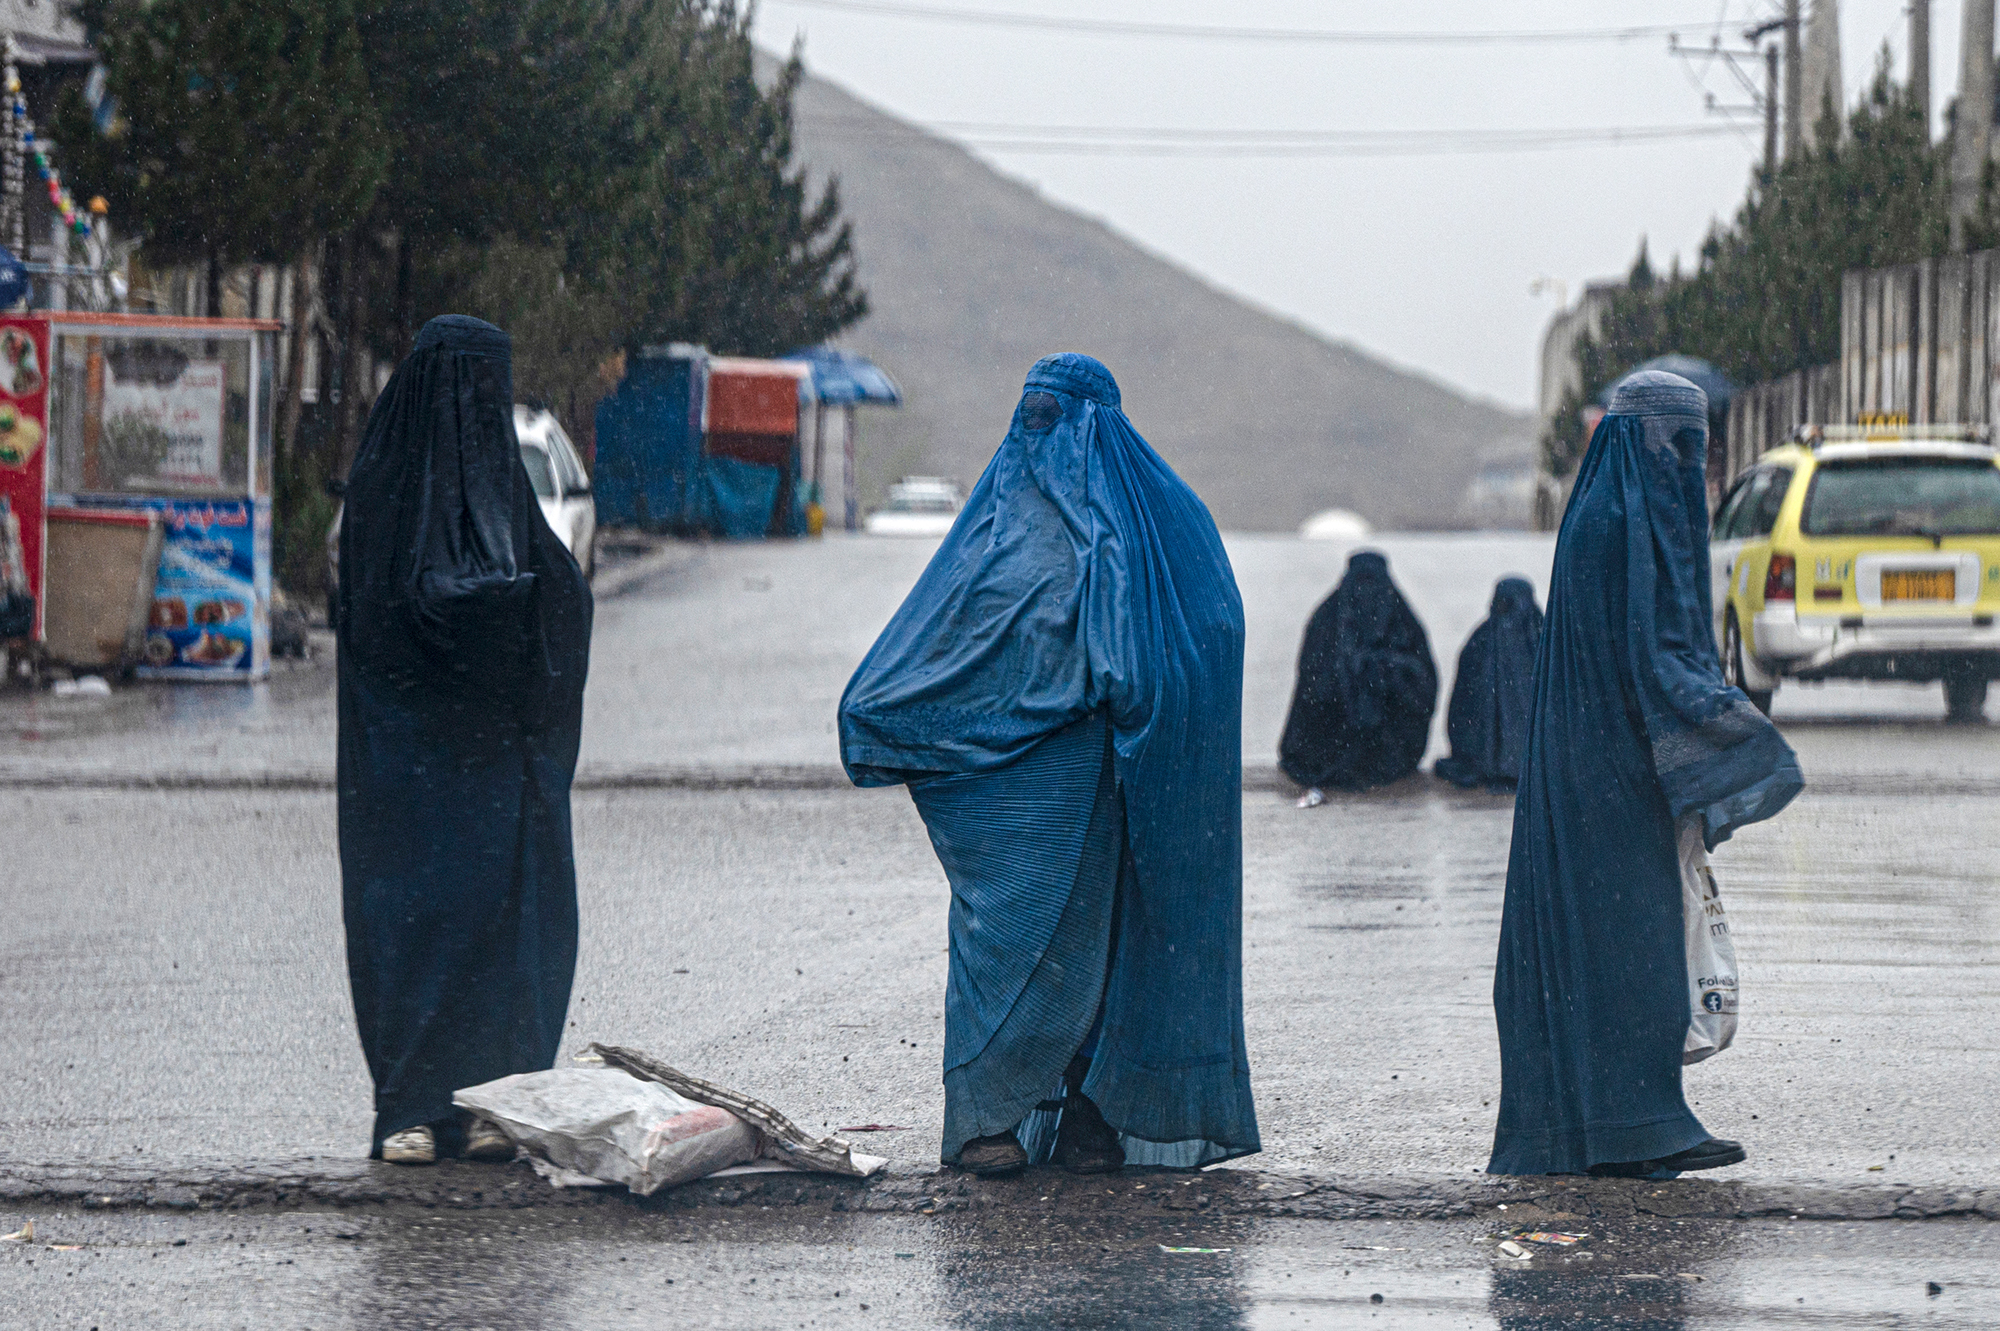 Bettelnde Frauen in Afghanistan